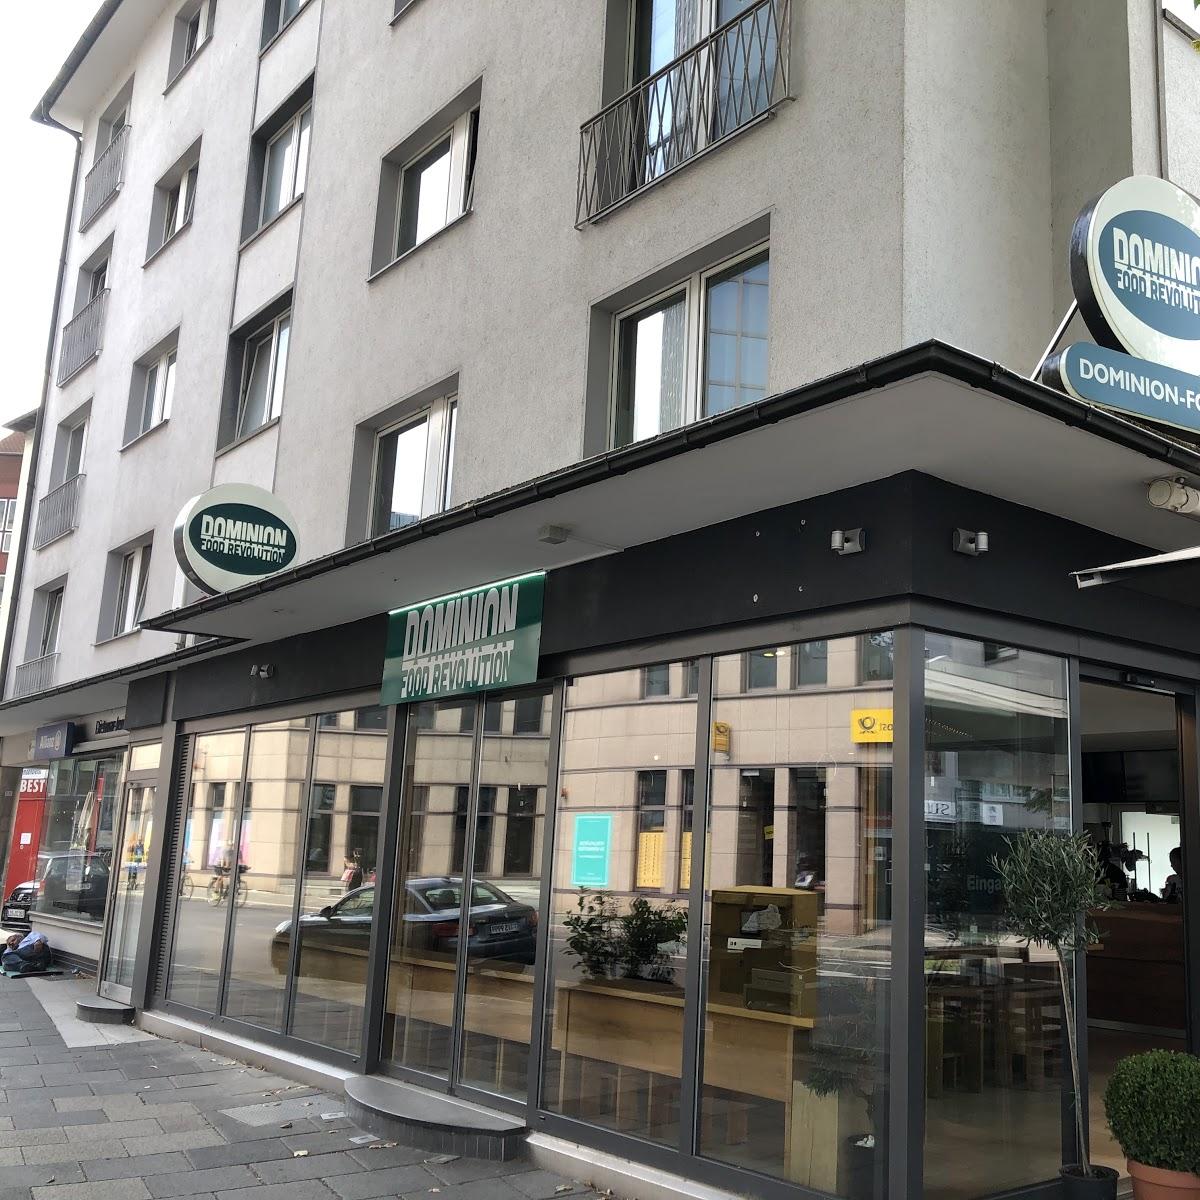 Restaurant "Dominion" in Frankfurt am Main